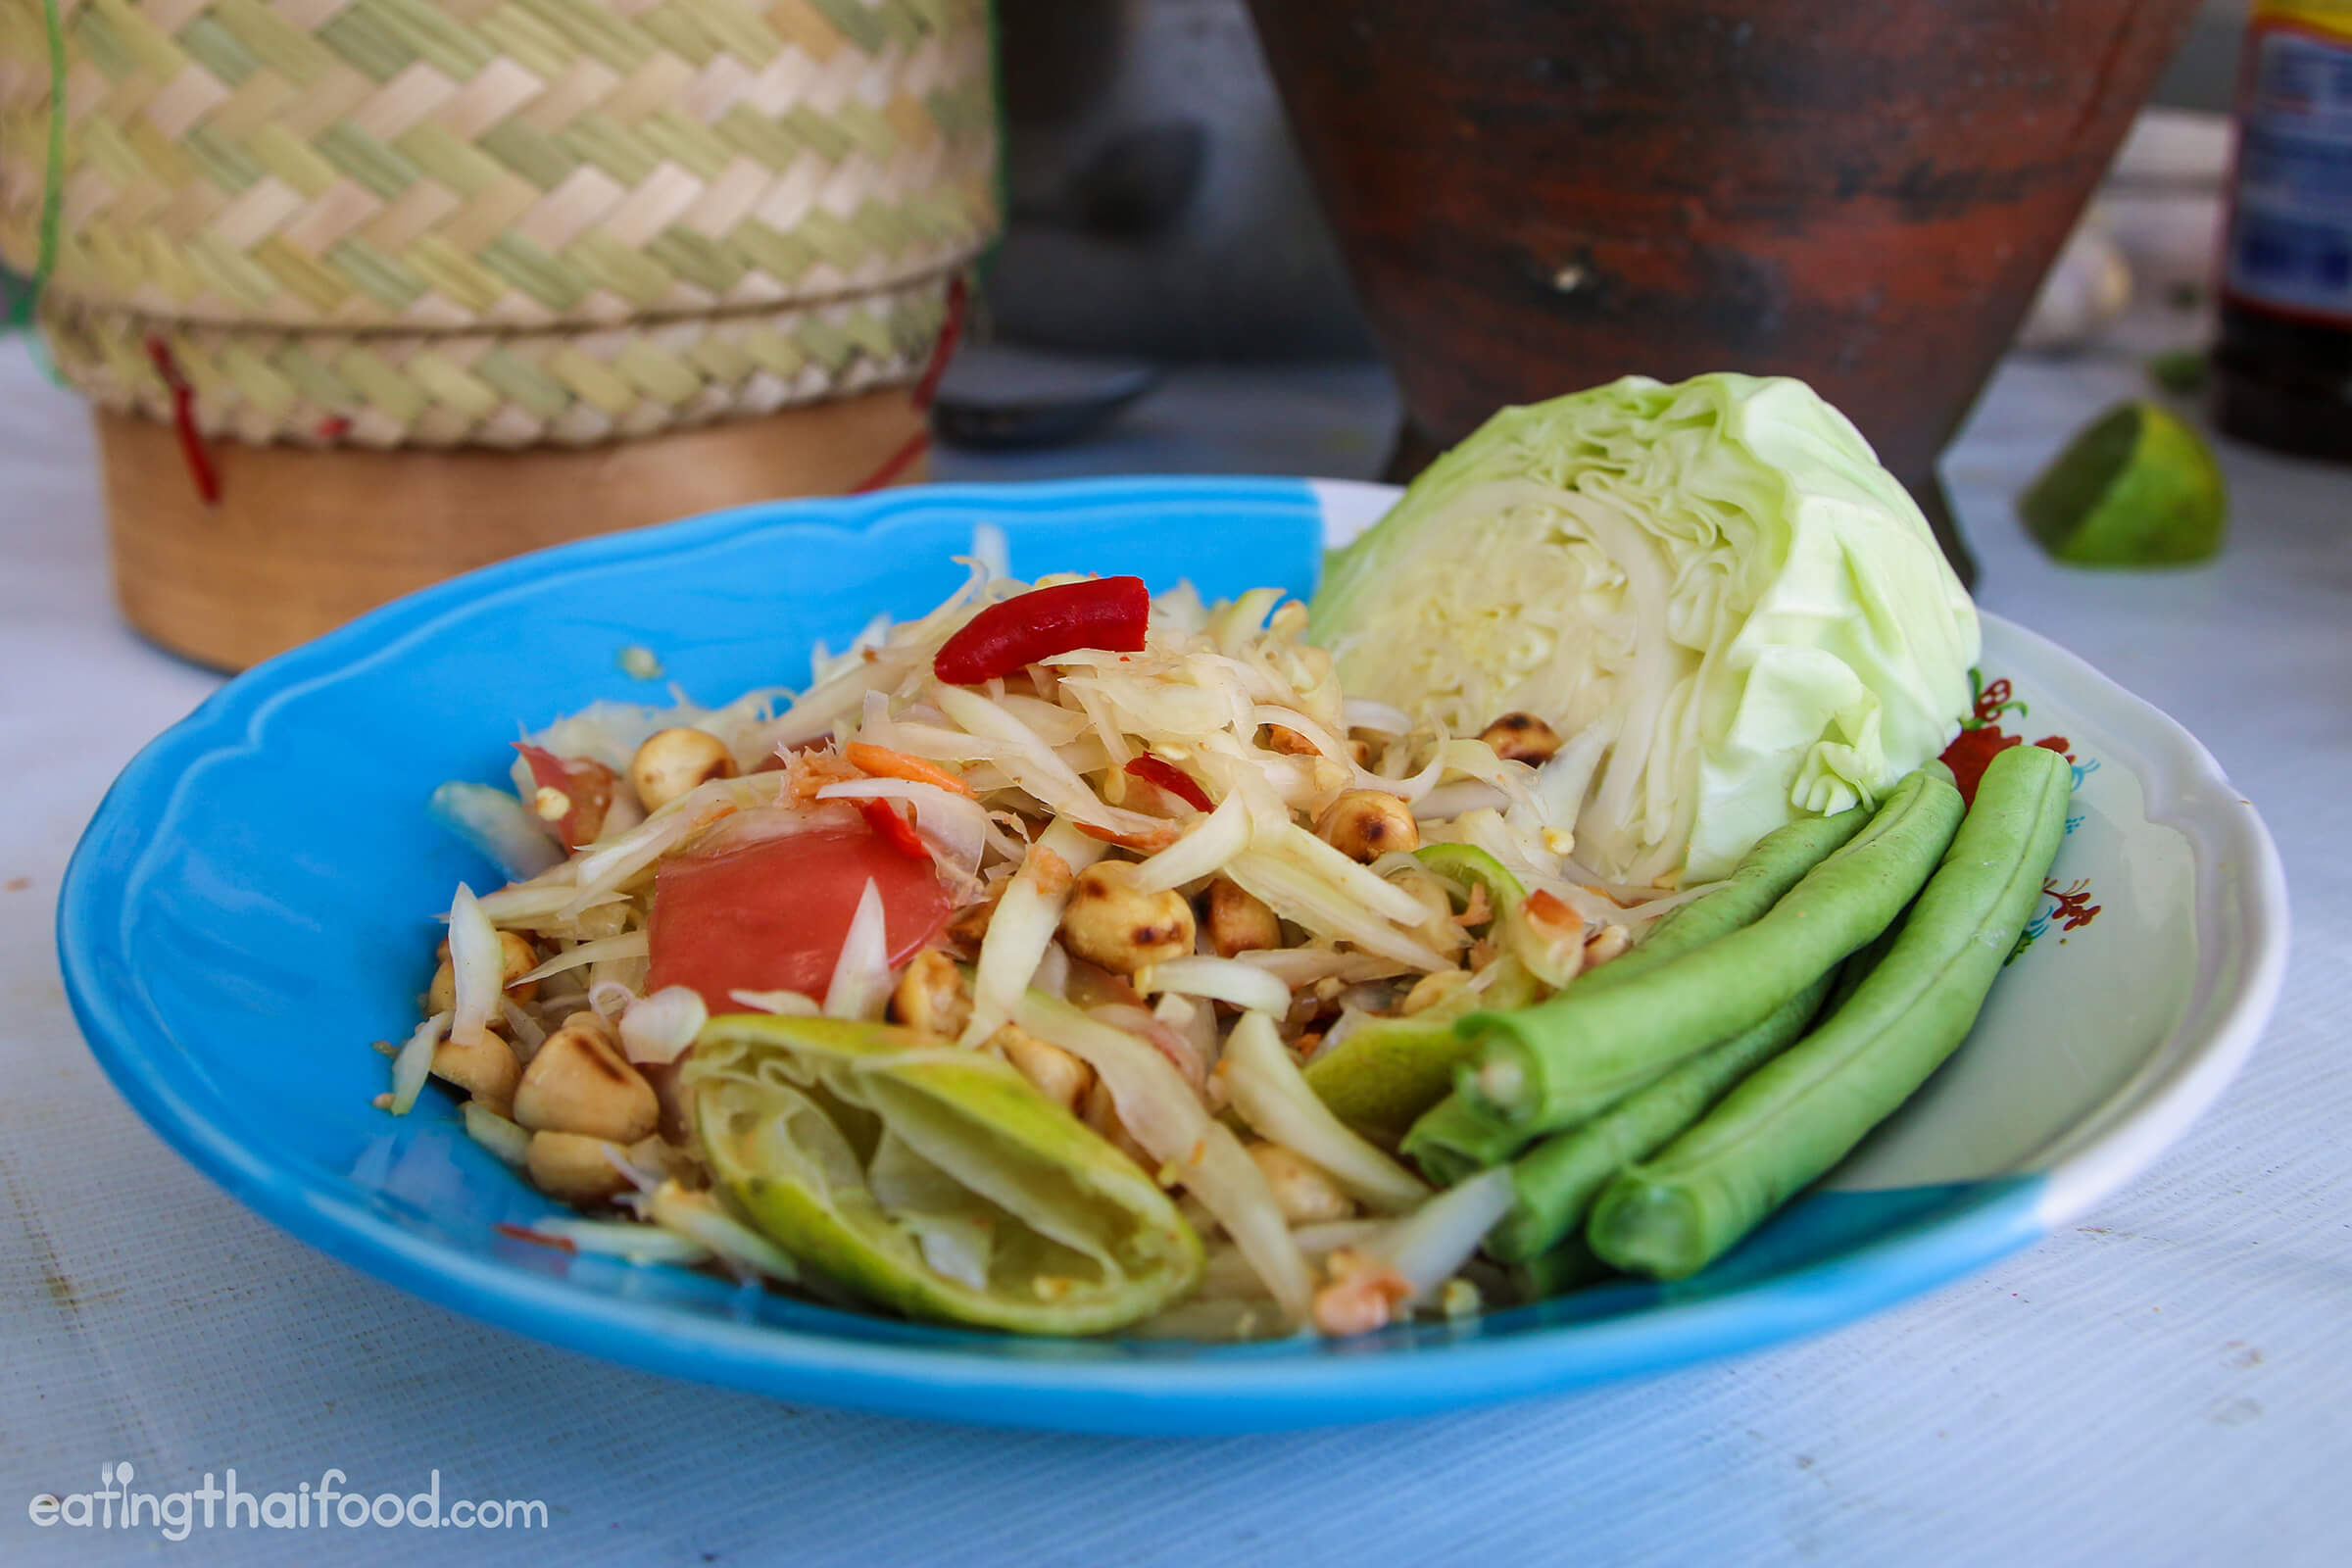 https://www.eatingthaifood.com/wp-content/uploads/2014/01/thai-green-papaya-salad-recipe-1.jpg